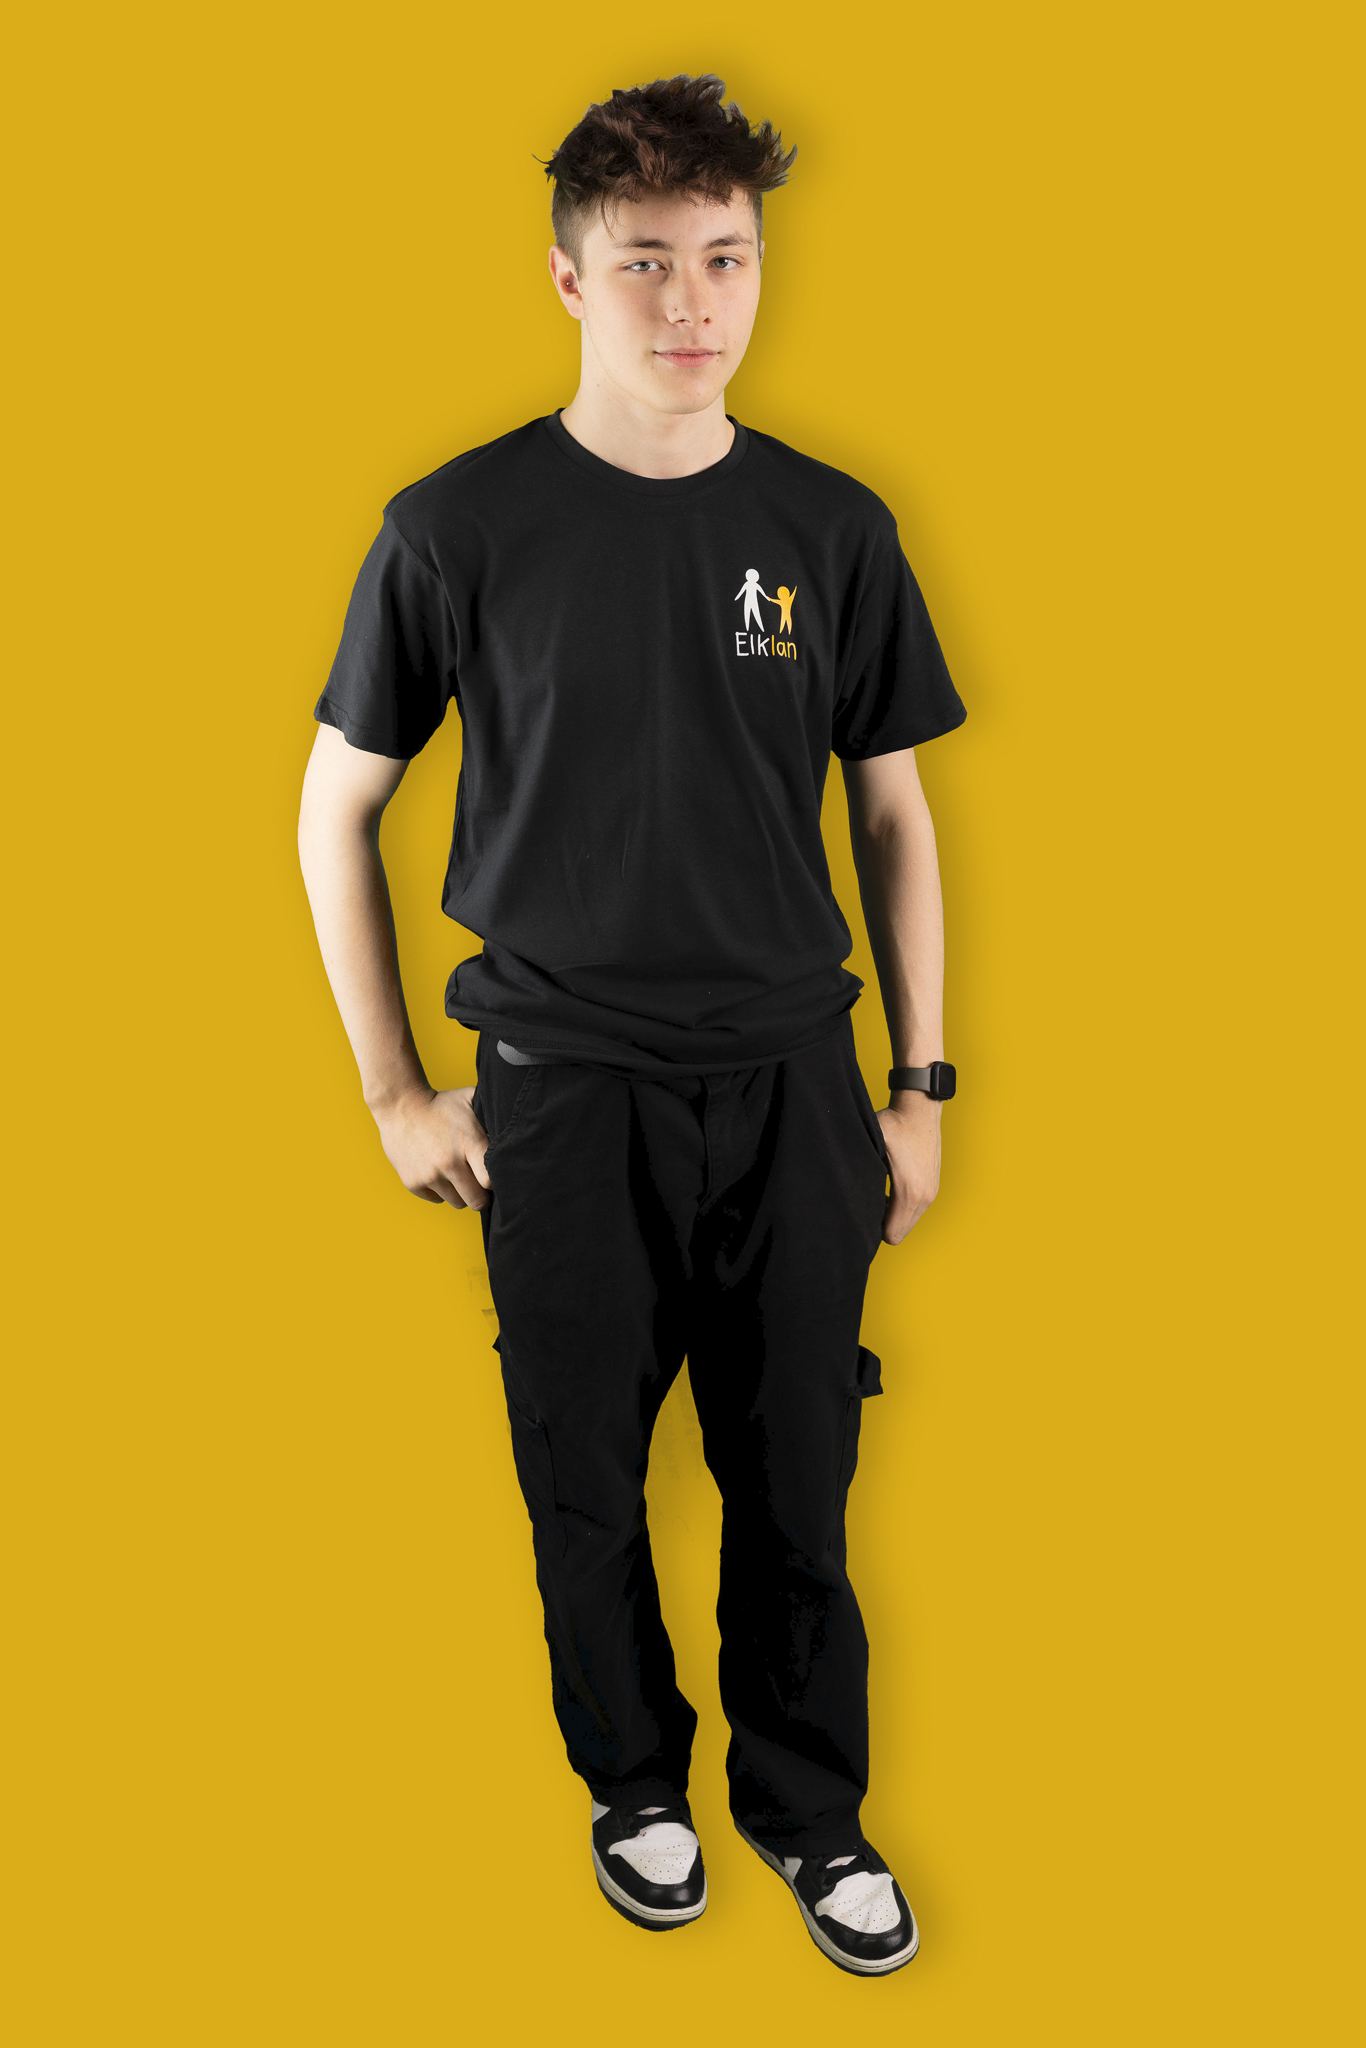 Elklan-branded Black T-shirt sample image